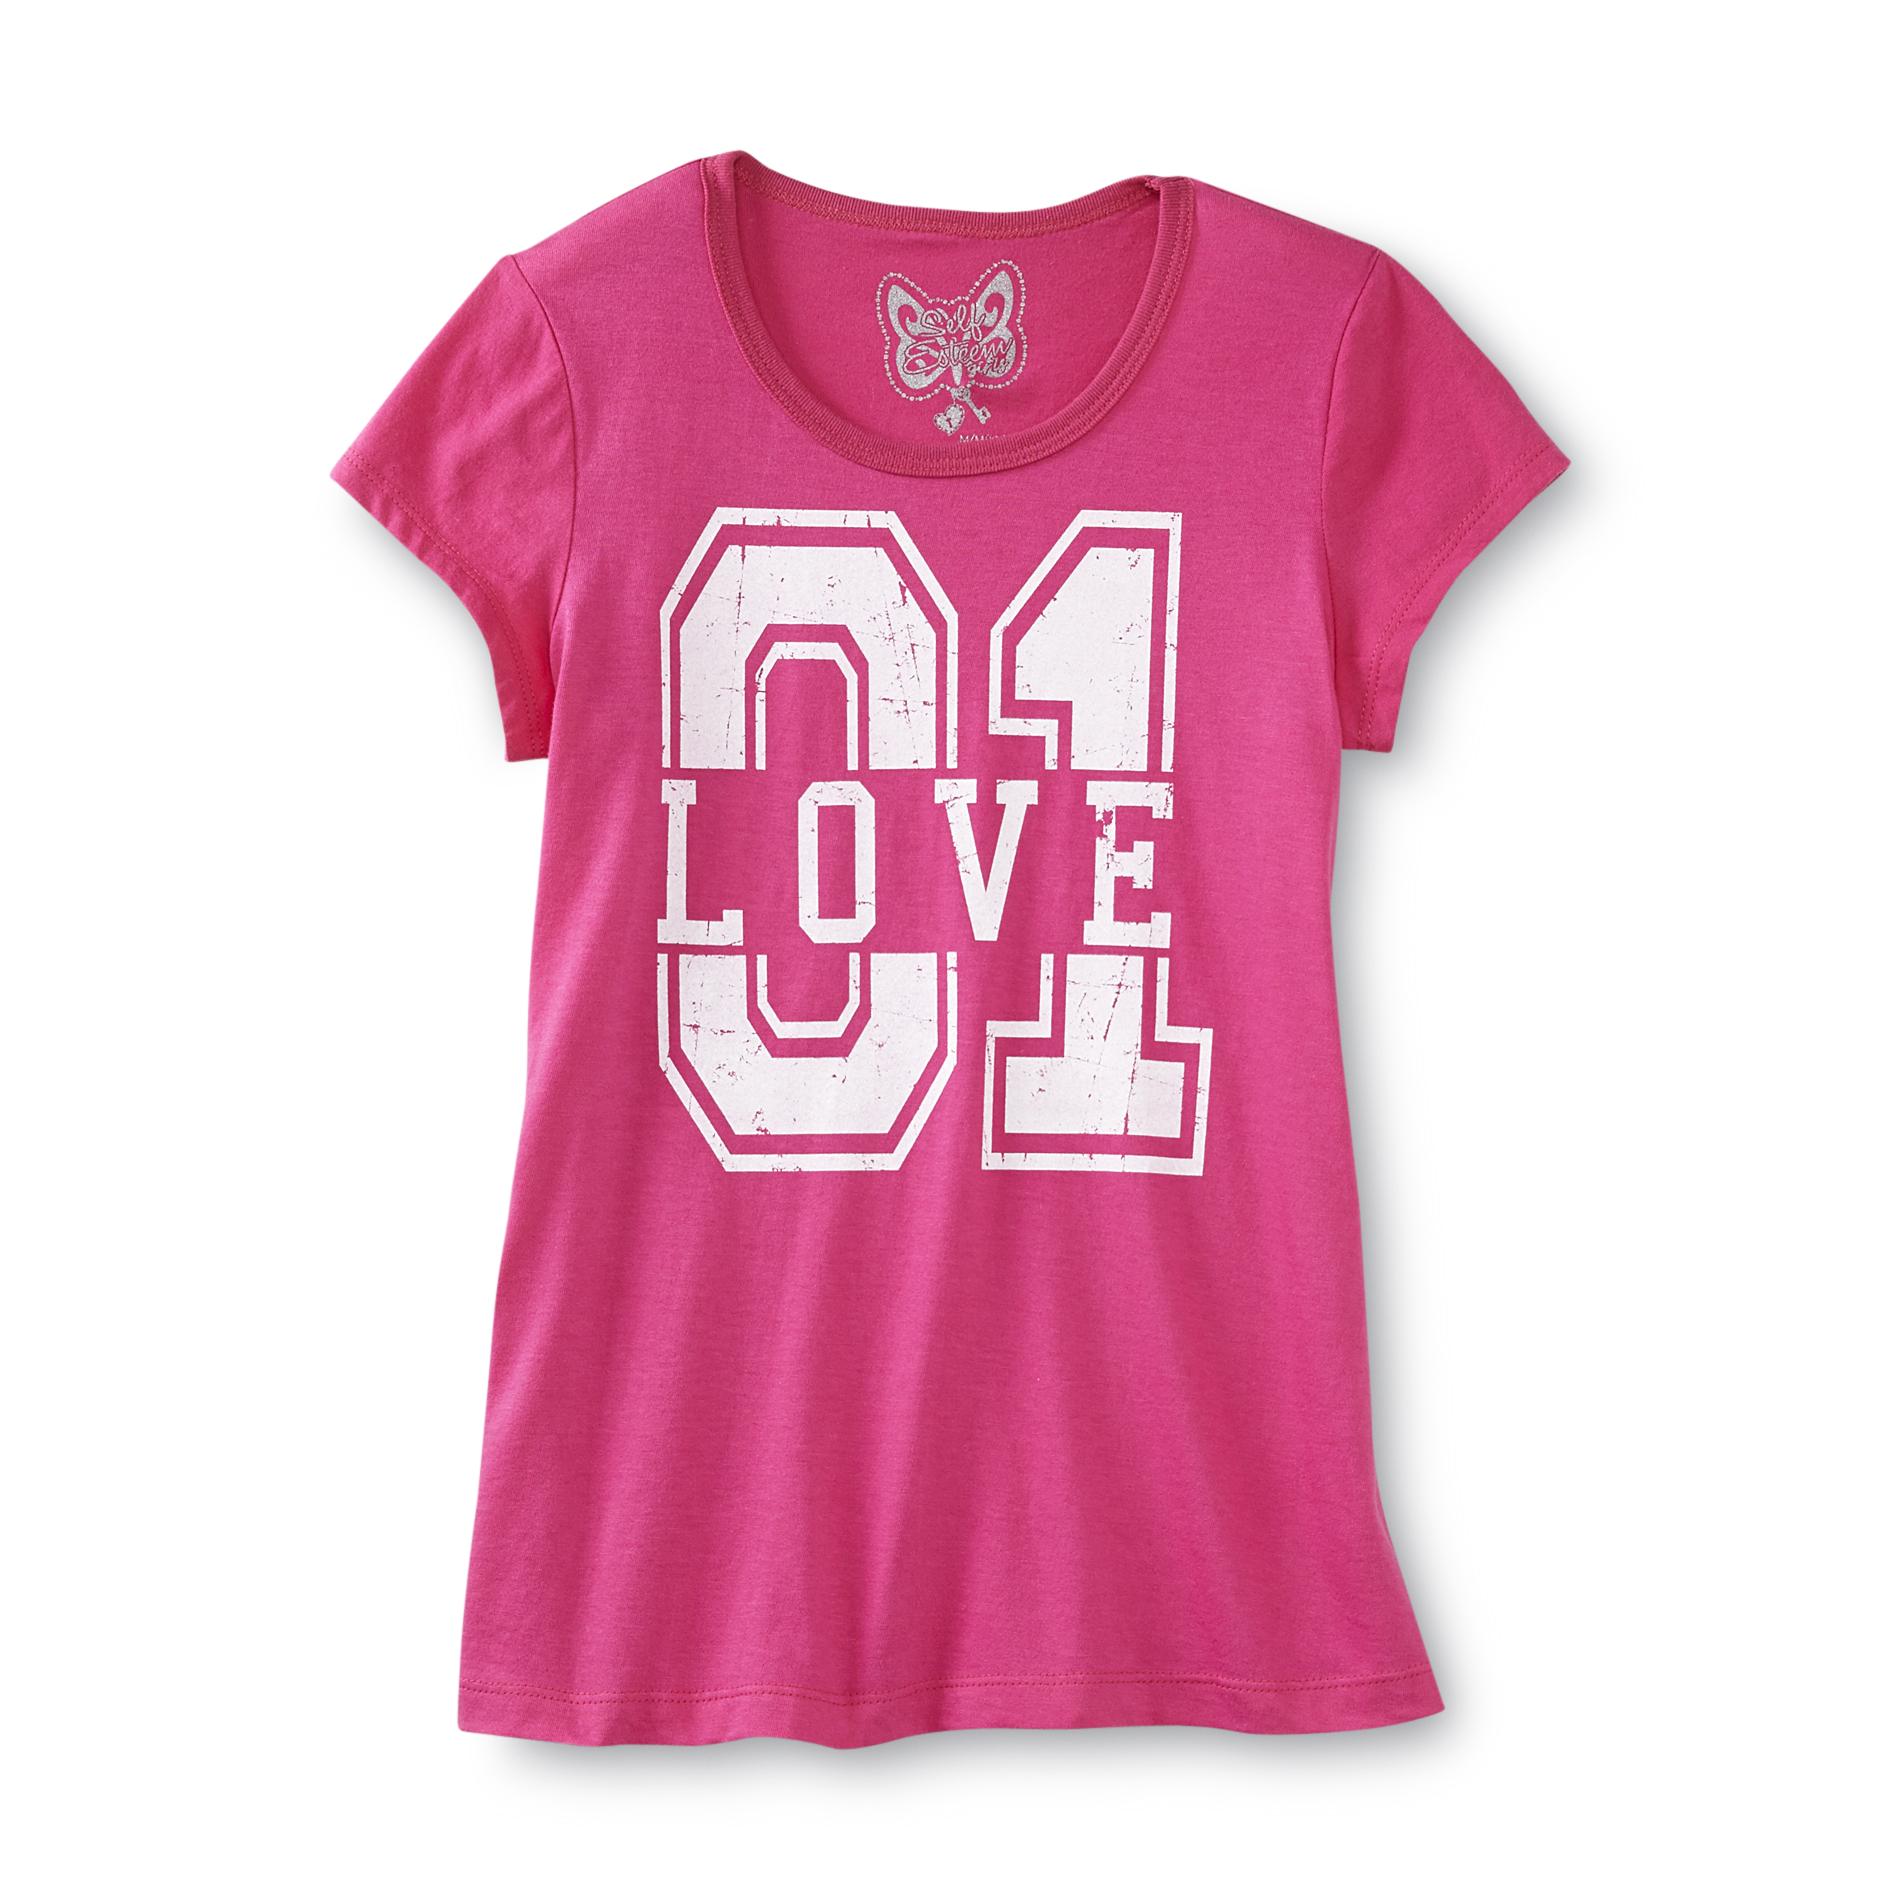 Self Esteem Girl's Graphic T-Shirt - Love